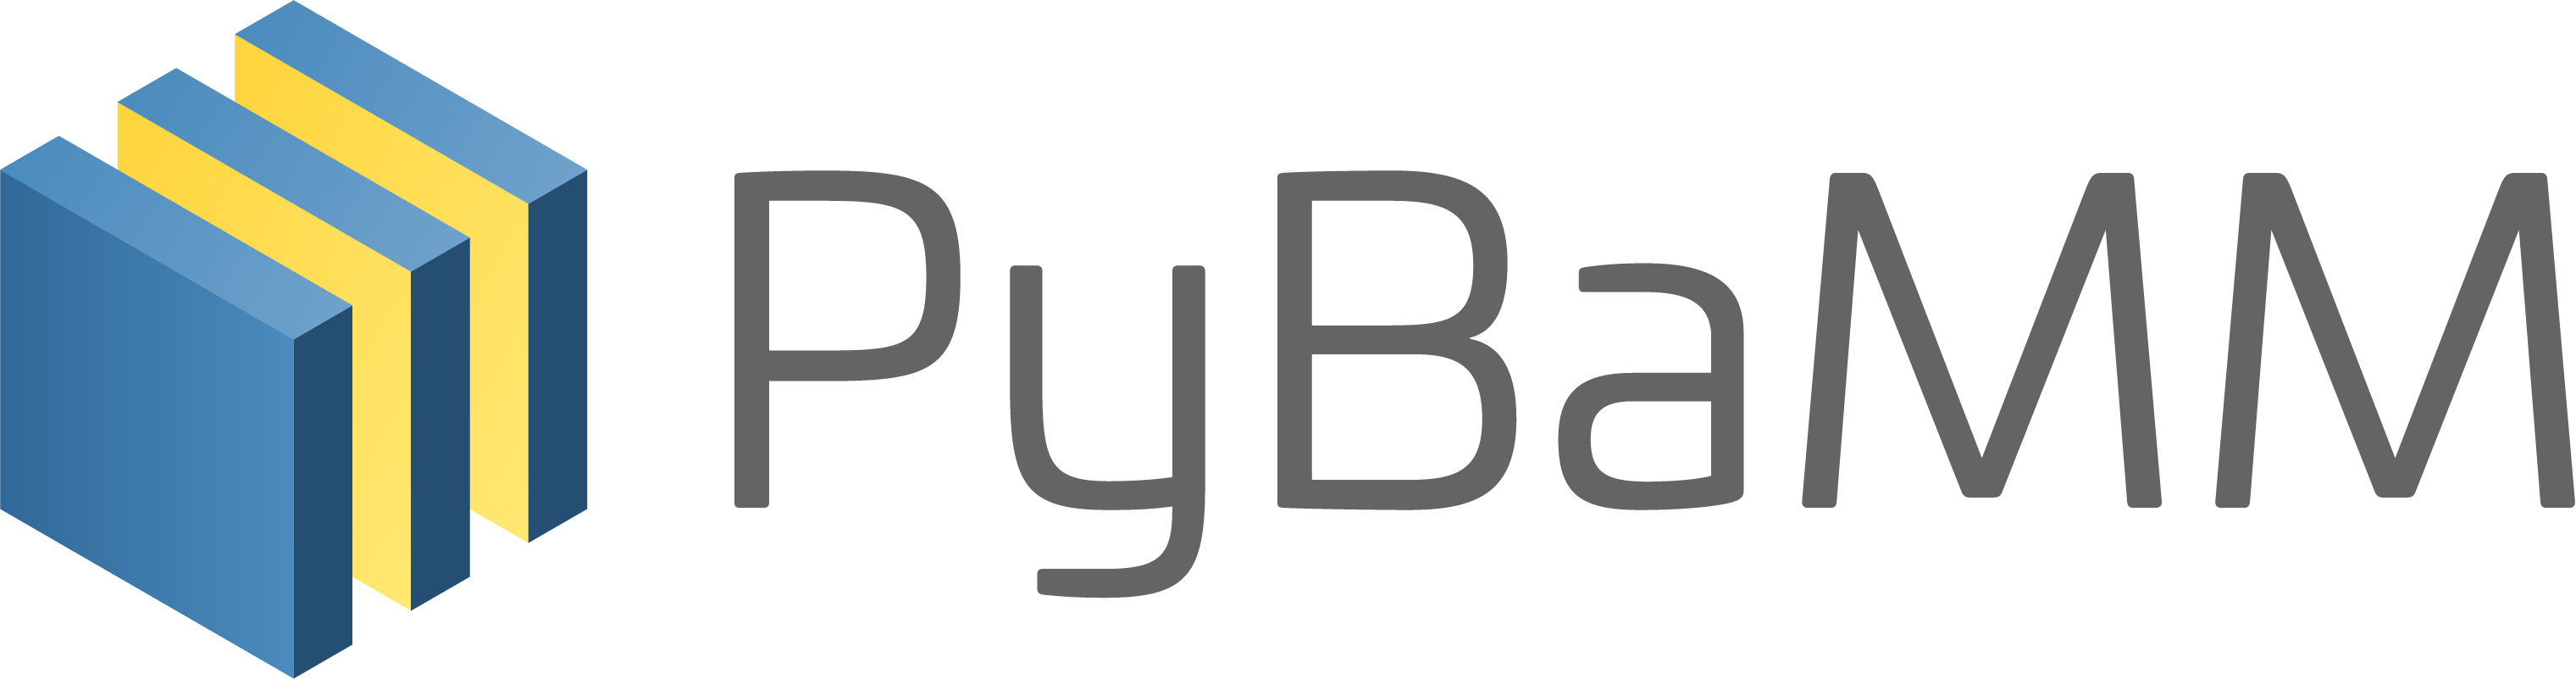 PyBaMM_logo